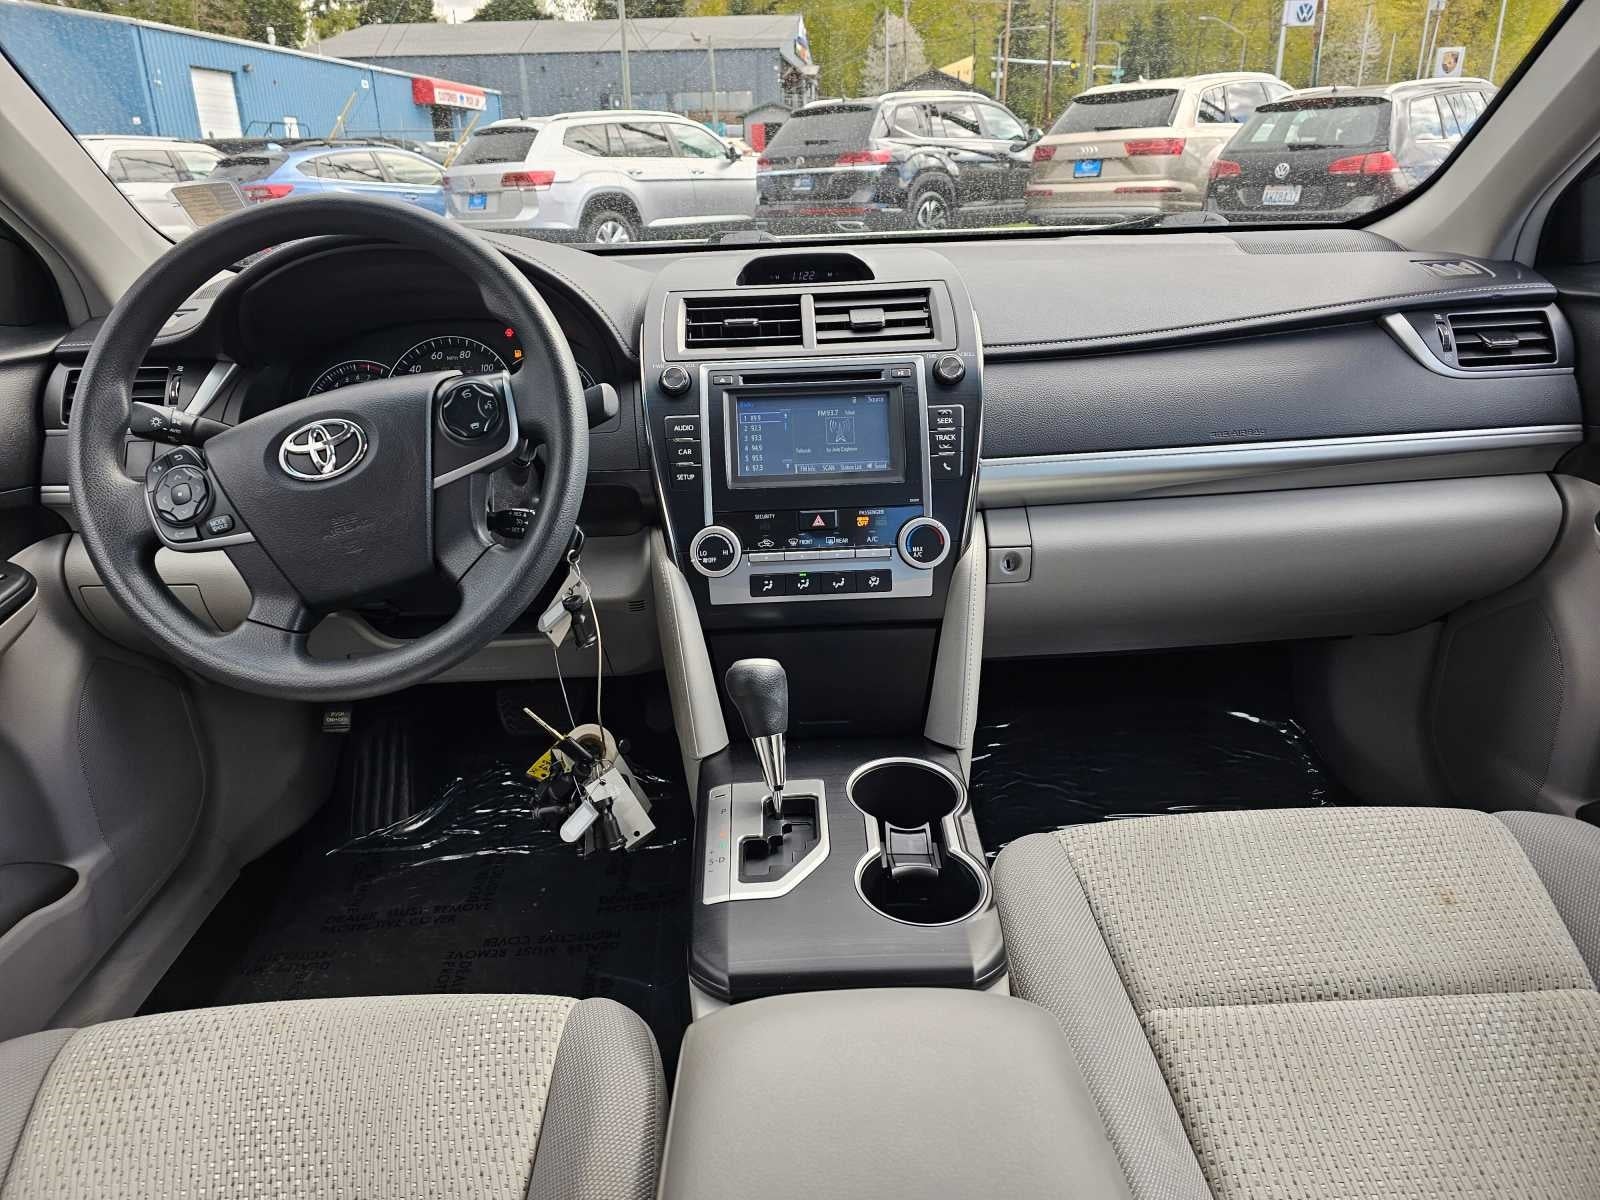 2014 Toyota Camry 4dr Sdn I4 Auto LE *Ltd Avail*